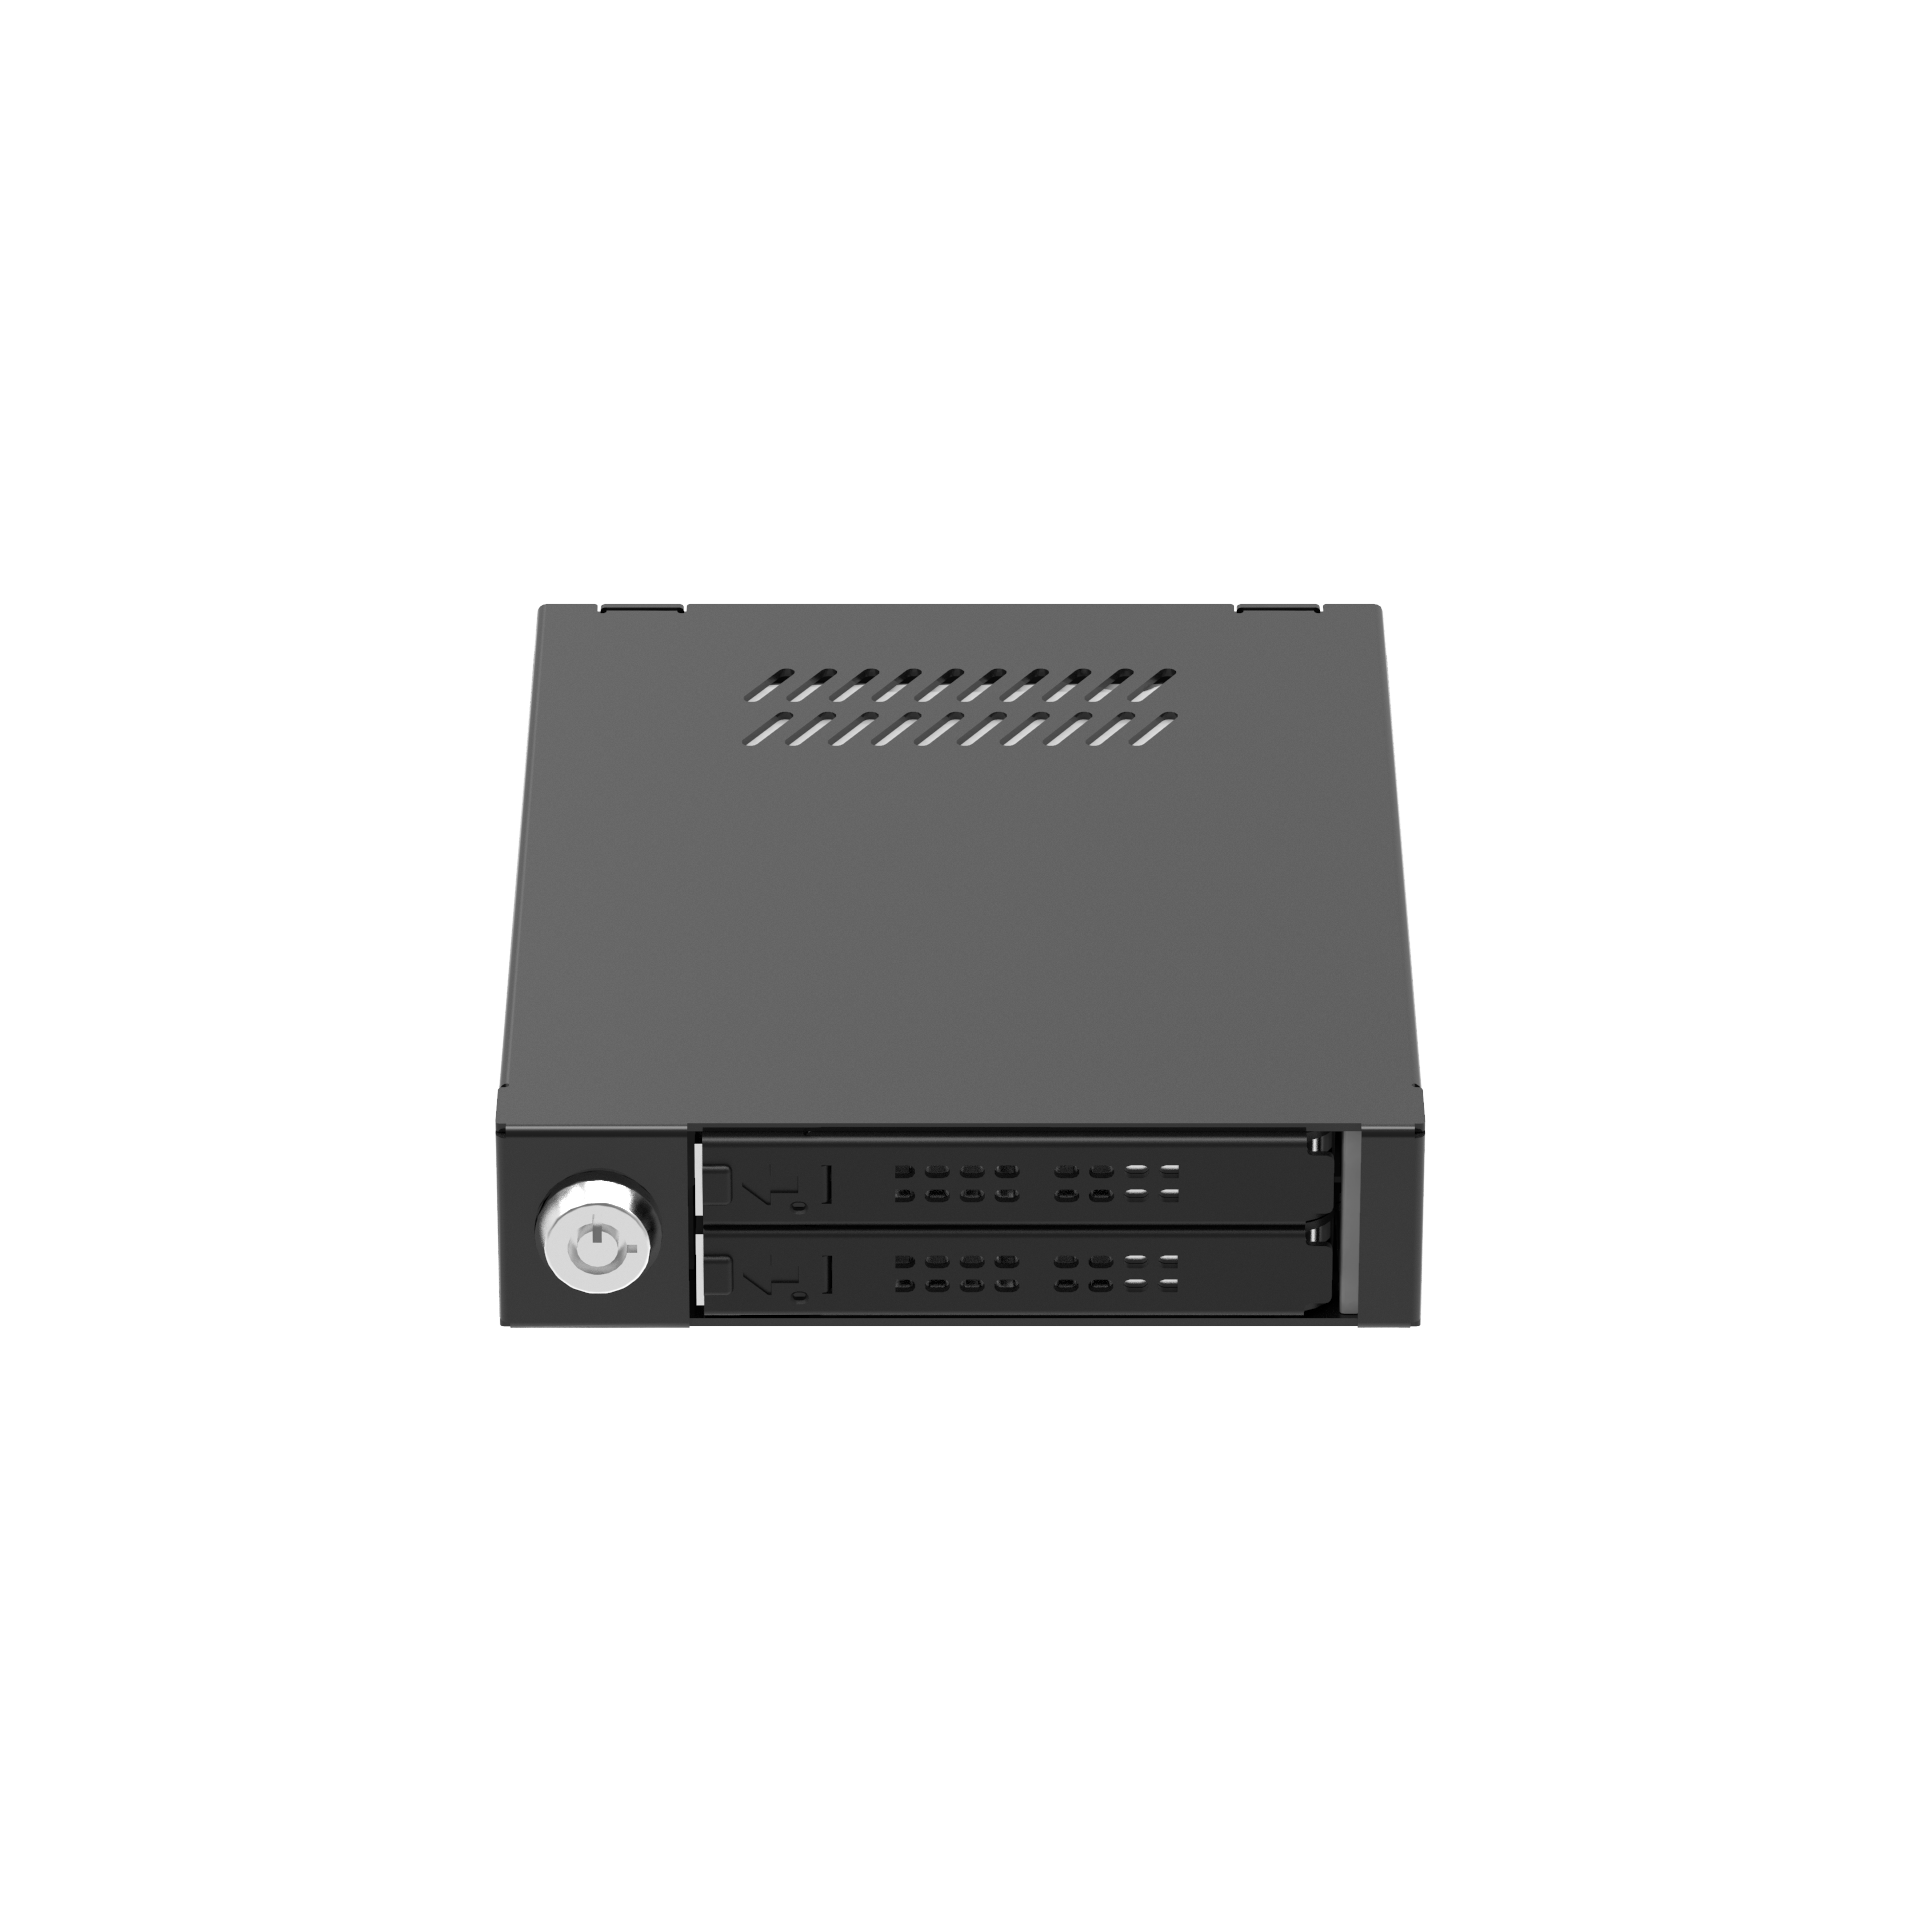 Unestech 2Bay 2.5" SATA SAS Hot Swap SSD Hdd Mobile Rack for 3.5" Floppy Bay